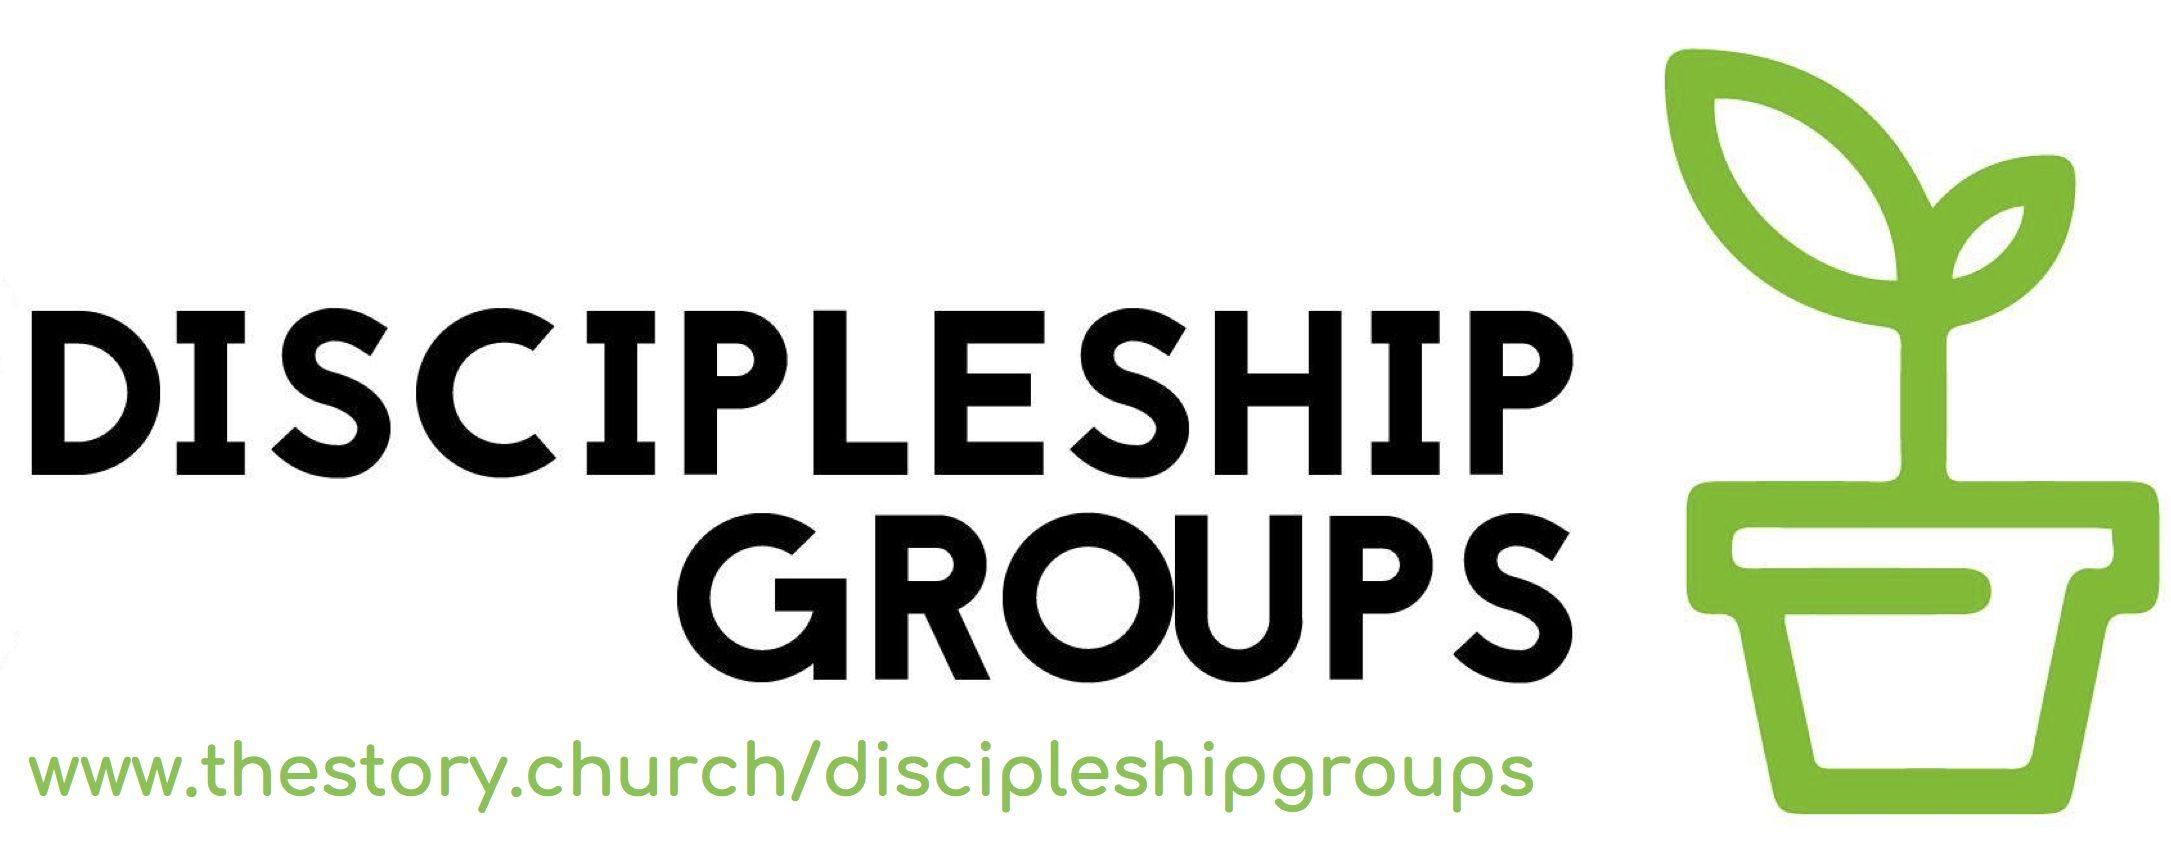 Discipleship Logo - discipleship groups logo simple | The Story Houston